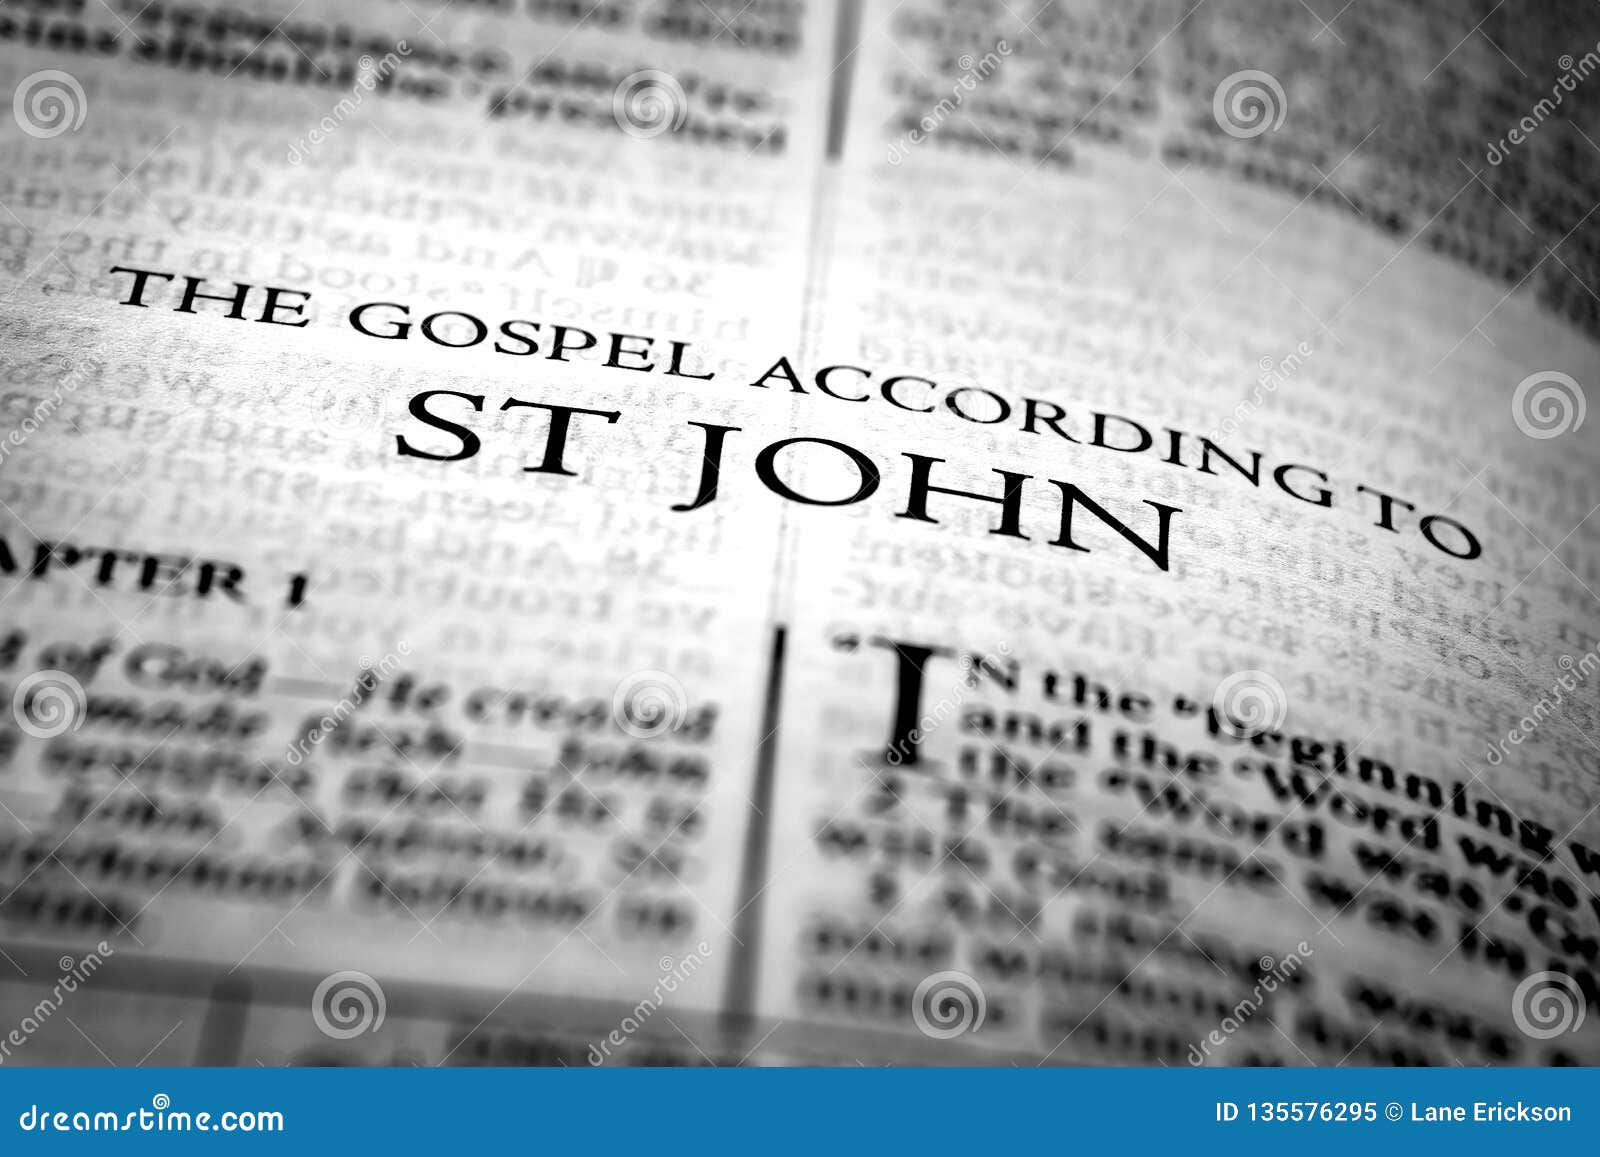 bible new testament christian gospel of st john saint